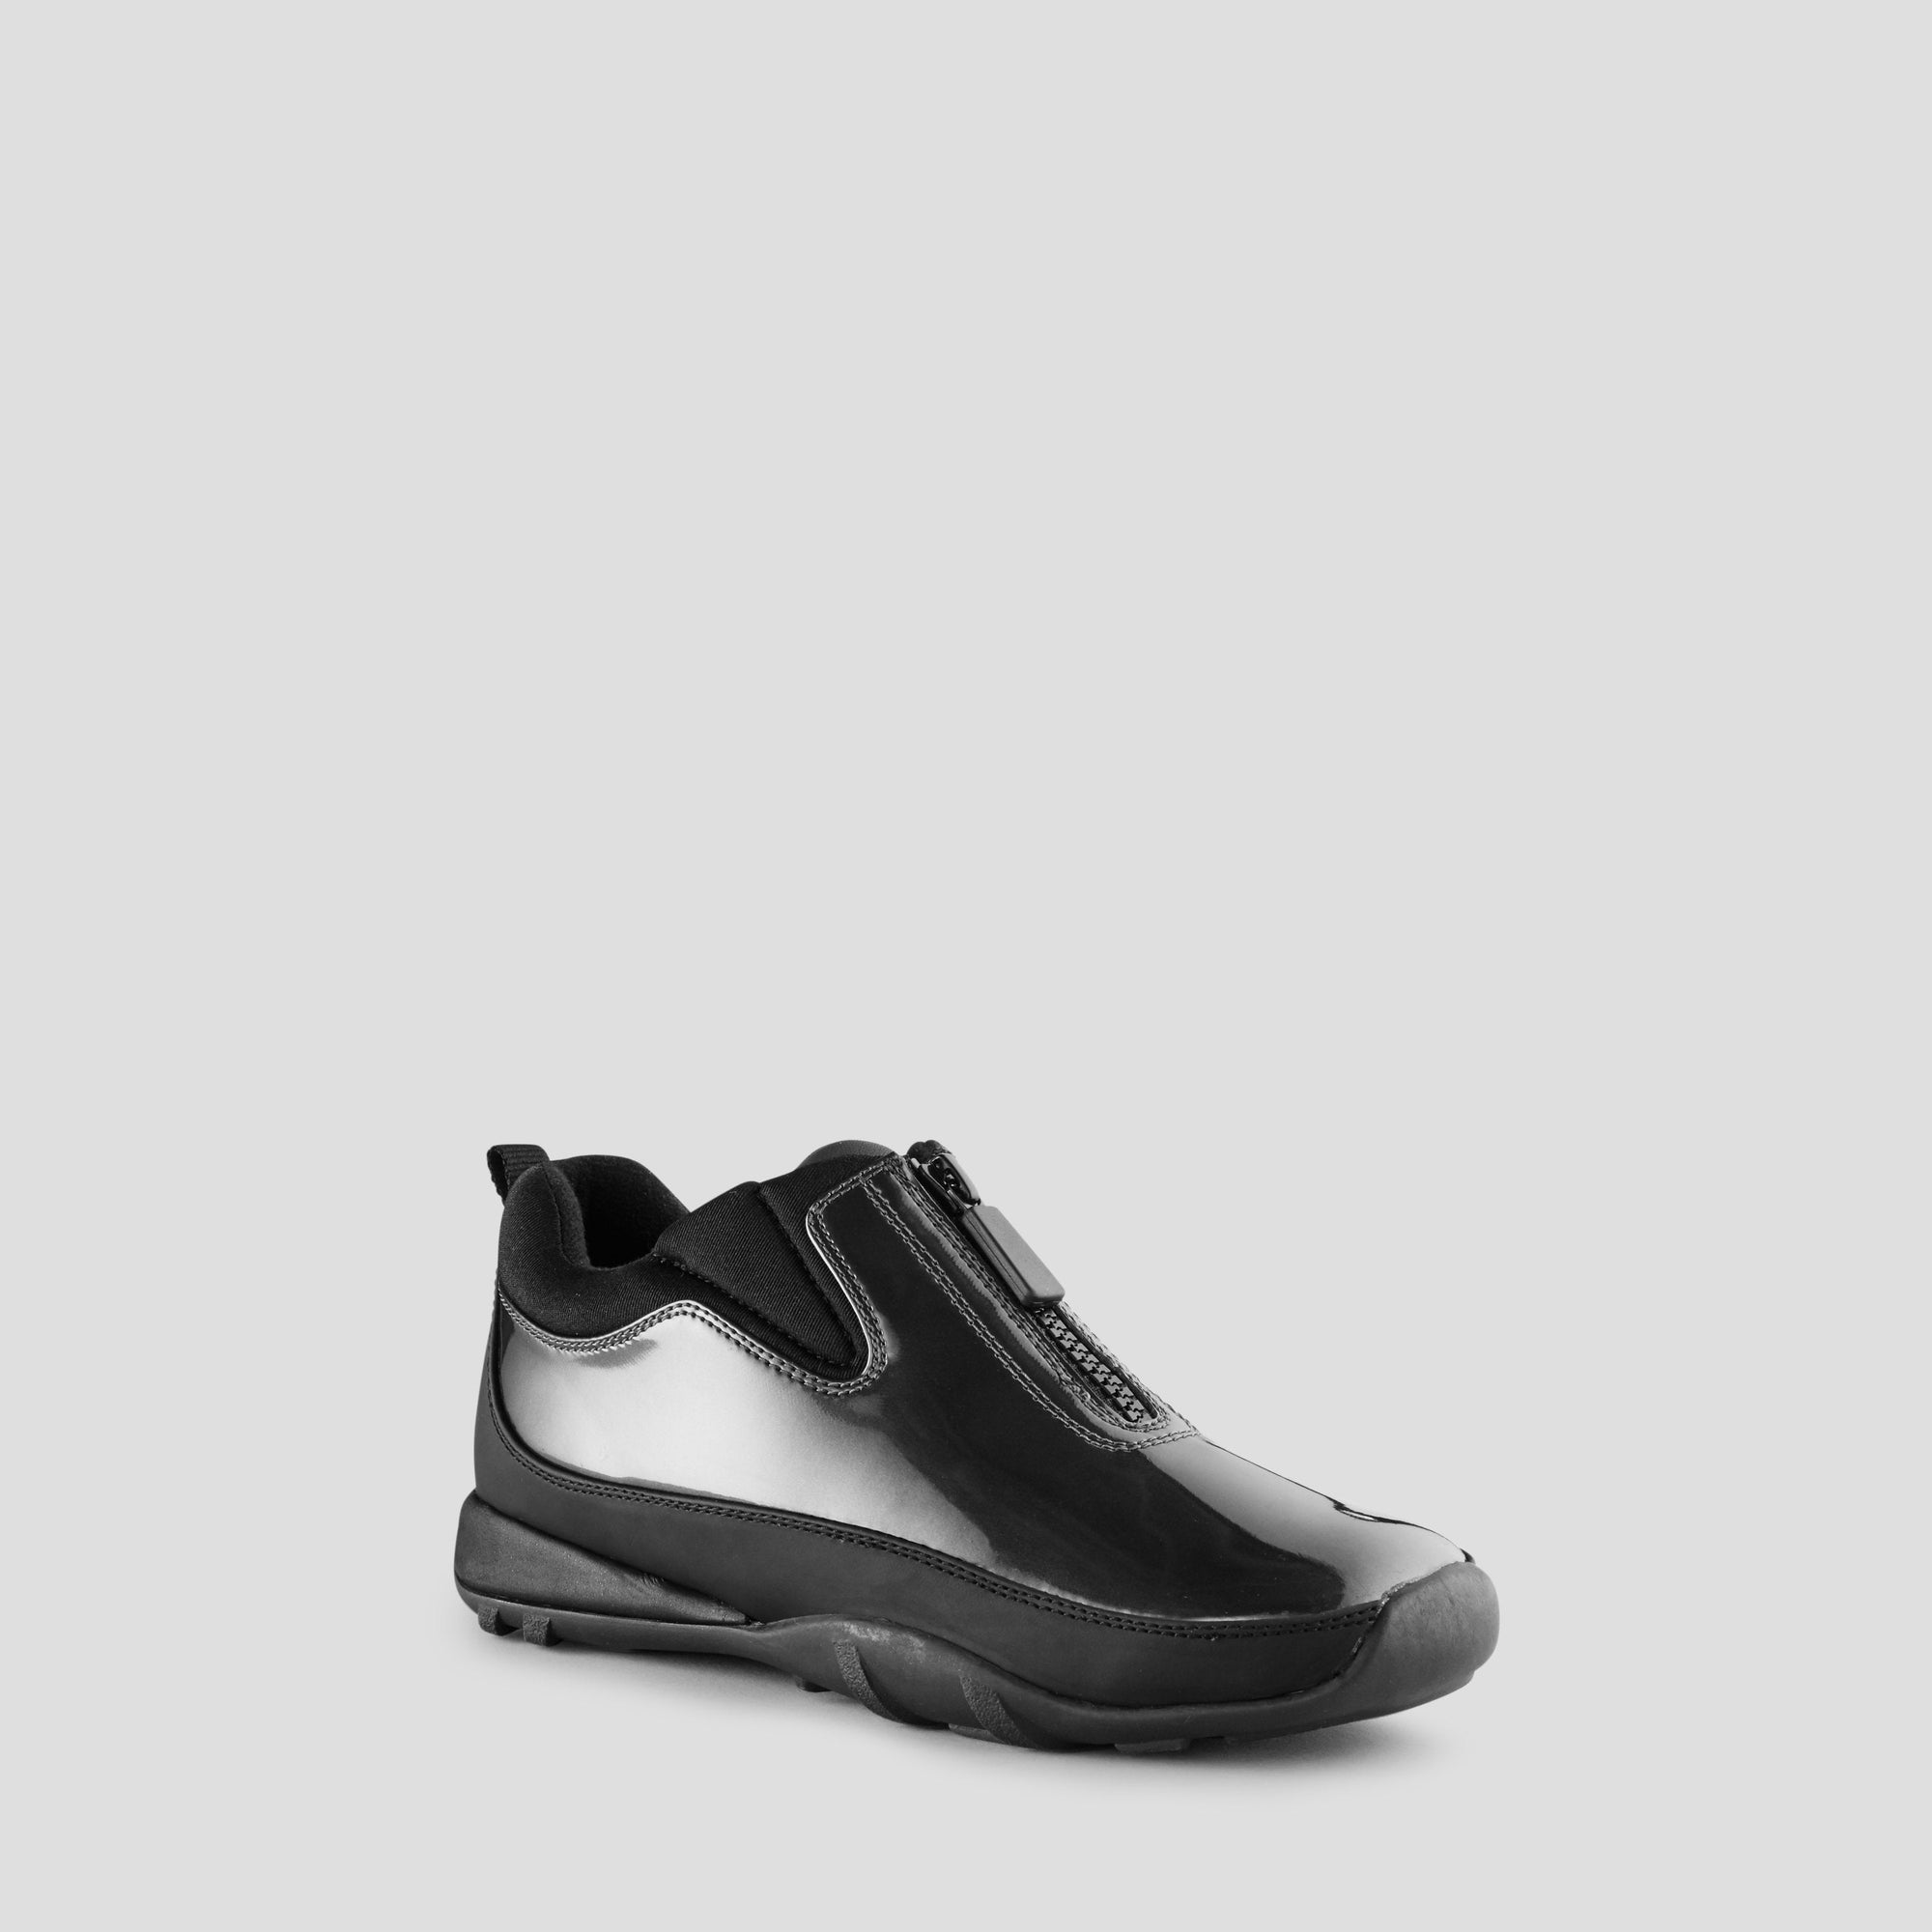 Howdoo Patent Rain Shoe - Last Chance - Colour Charcoal